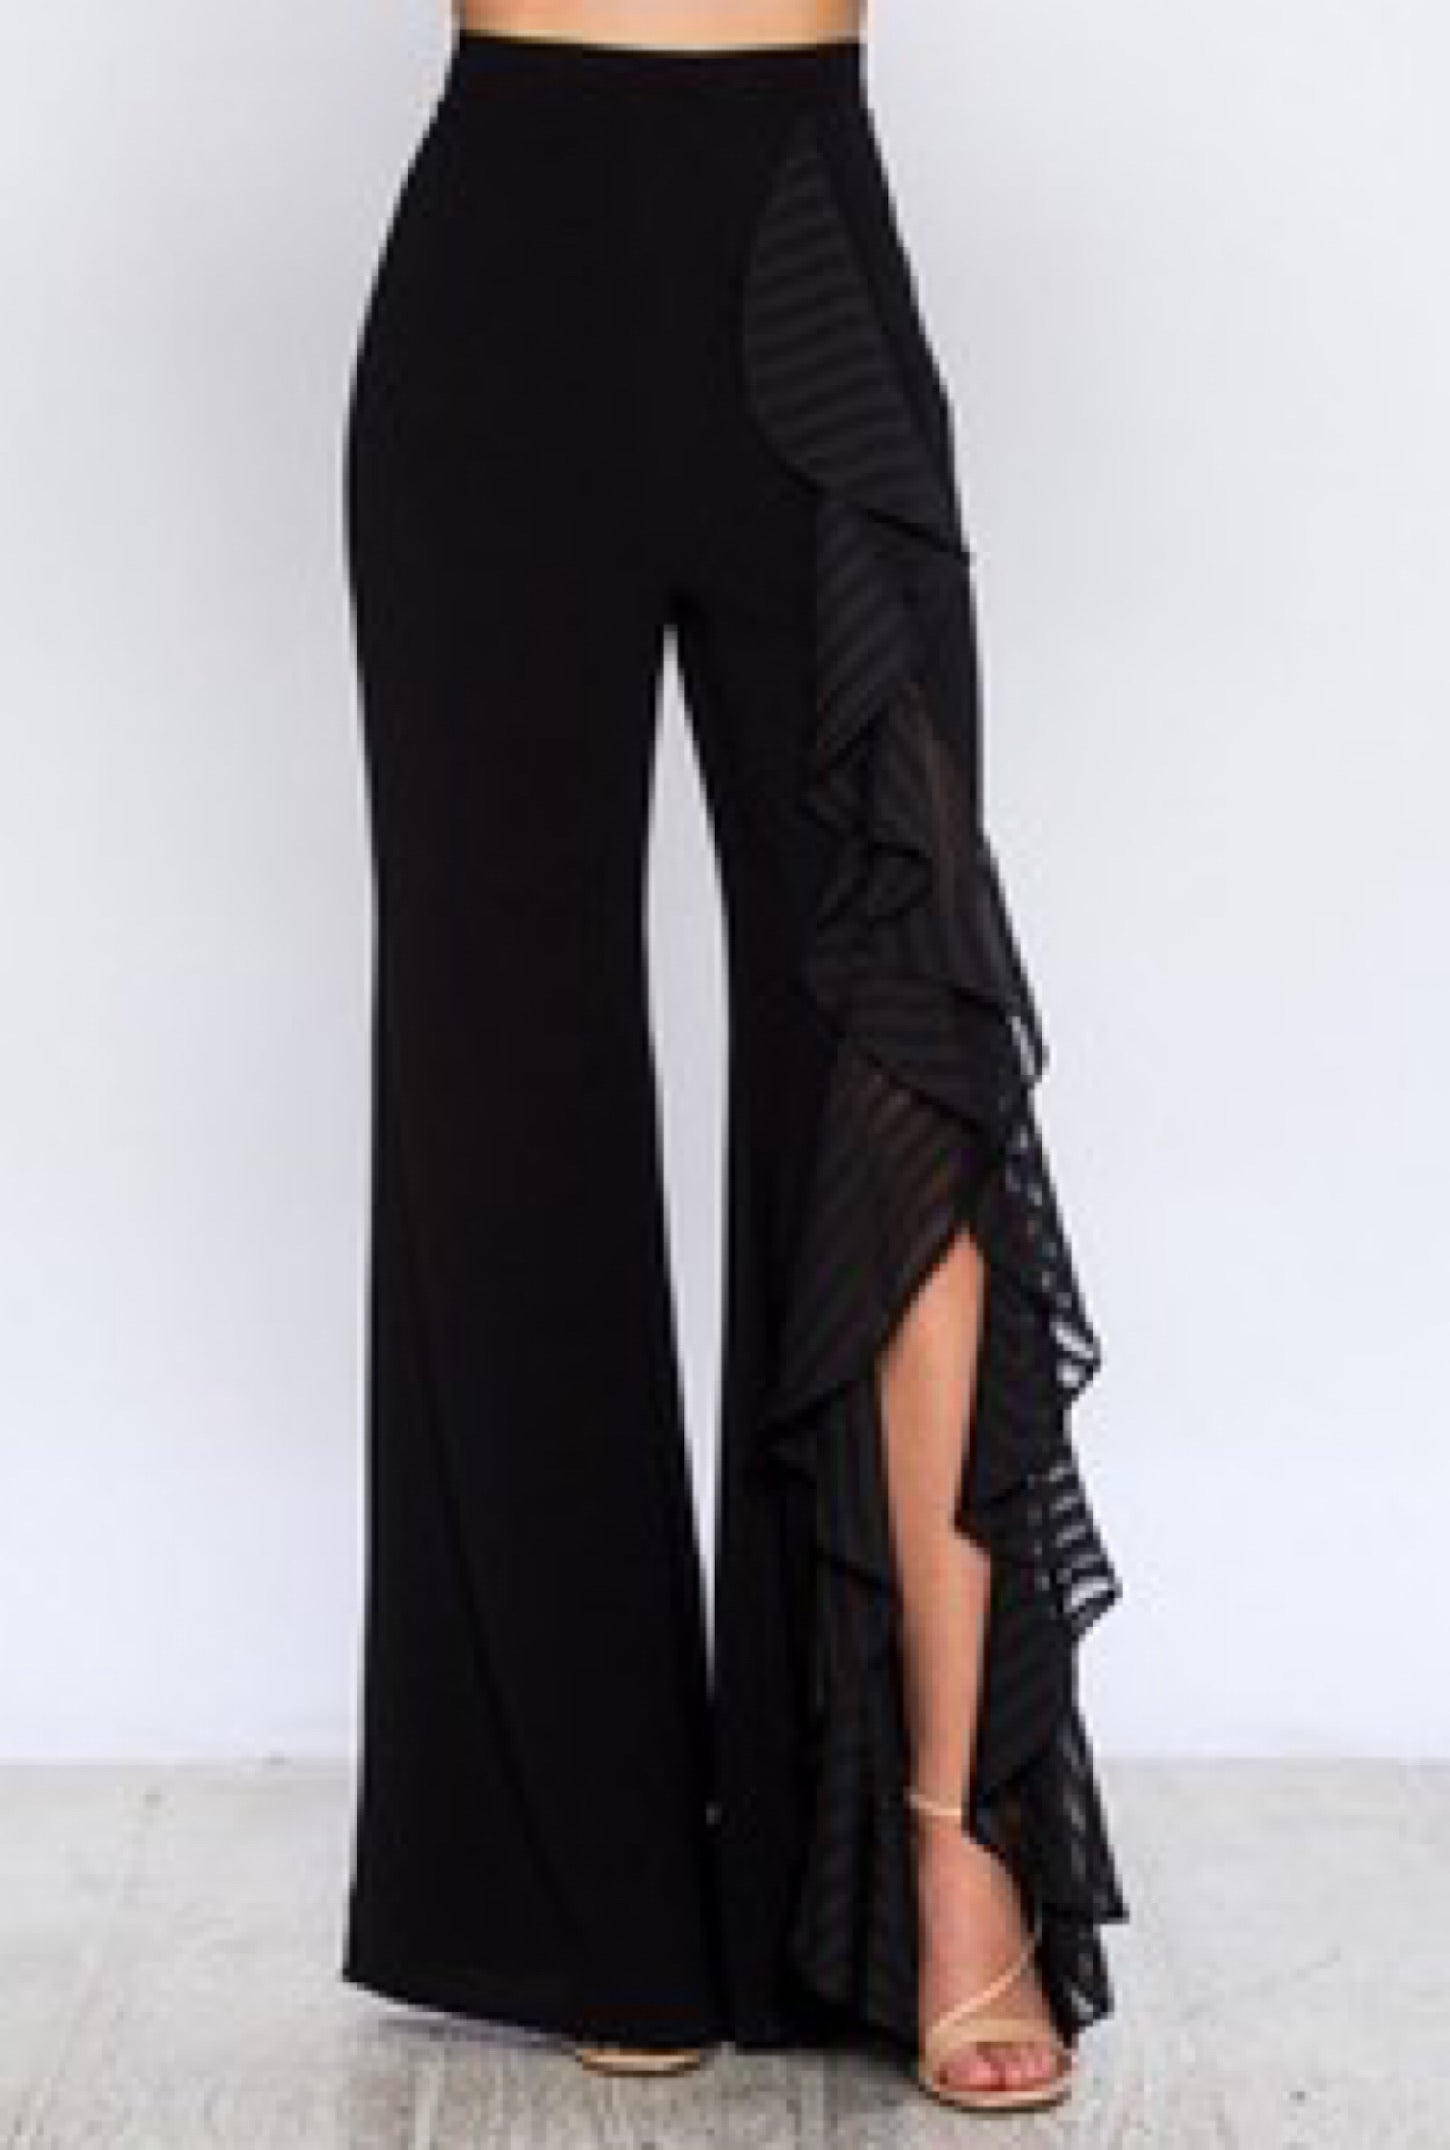 Women's Ruffle Pants Split High Waist Maxi Long Crepe Palazzo Overlay Pant  Skirt | eBay